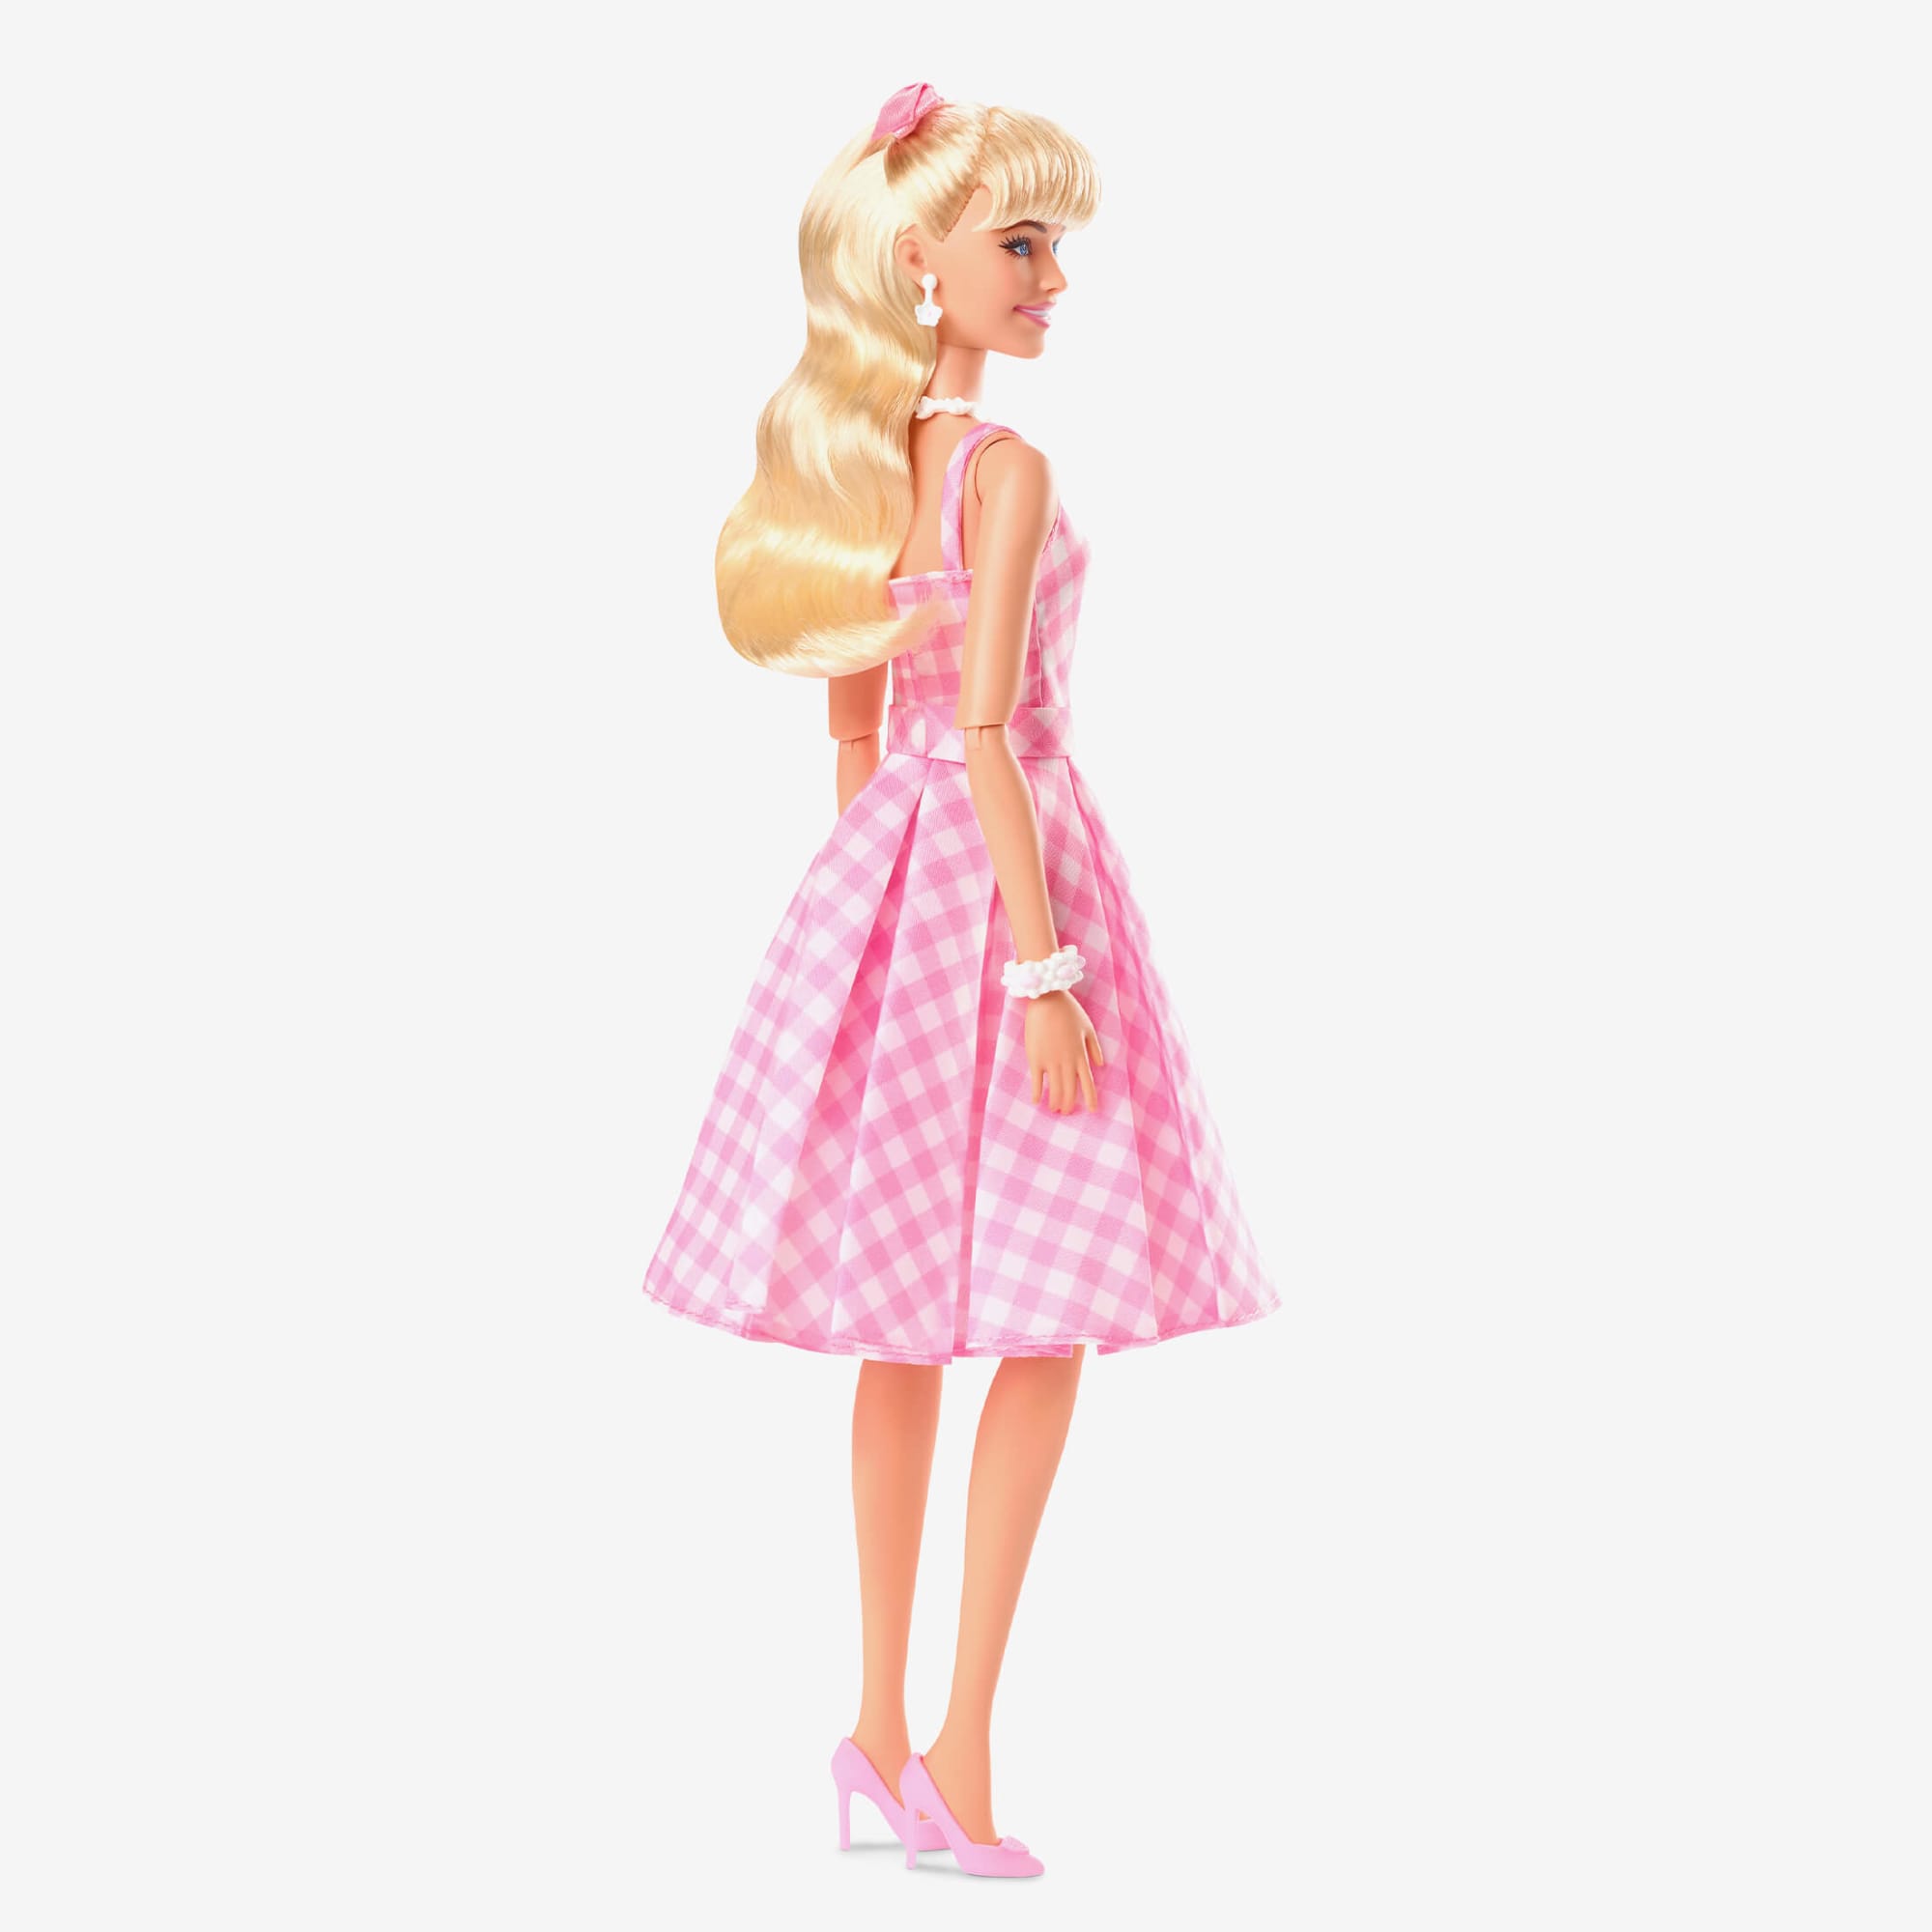 Boneca Barbie Fashionista com Estojo - Vestido Rosa Xadrez - Curvilínea -  188 - Mattel - superlegalbrinquedos